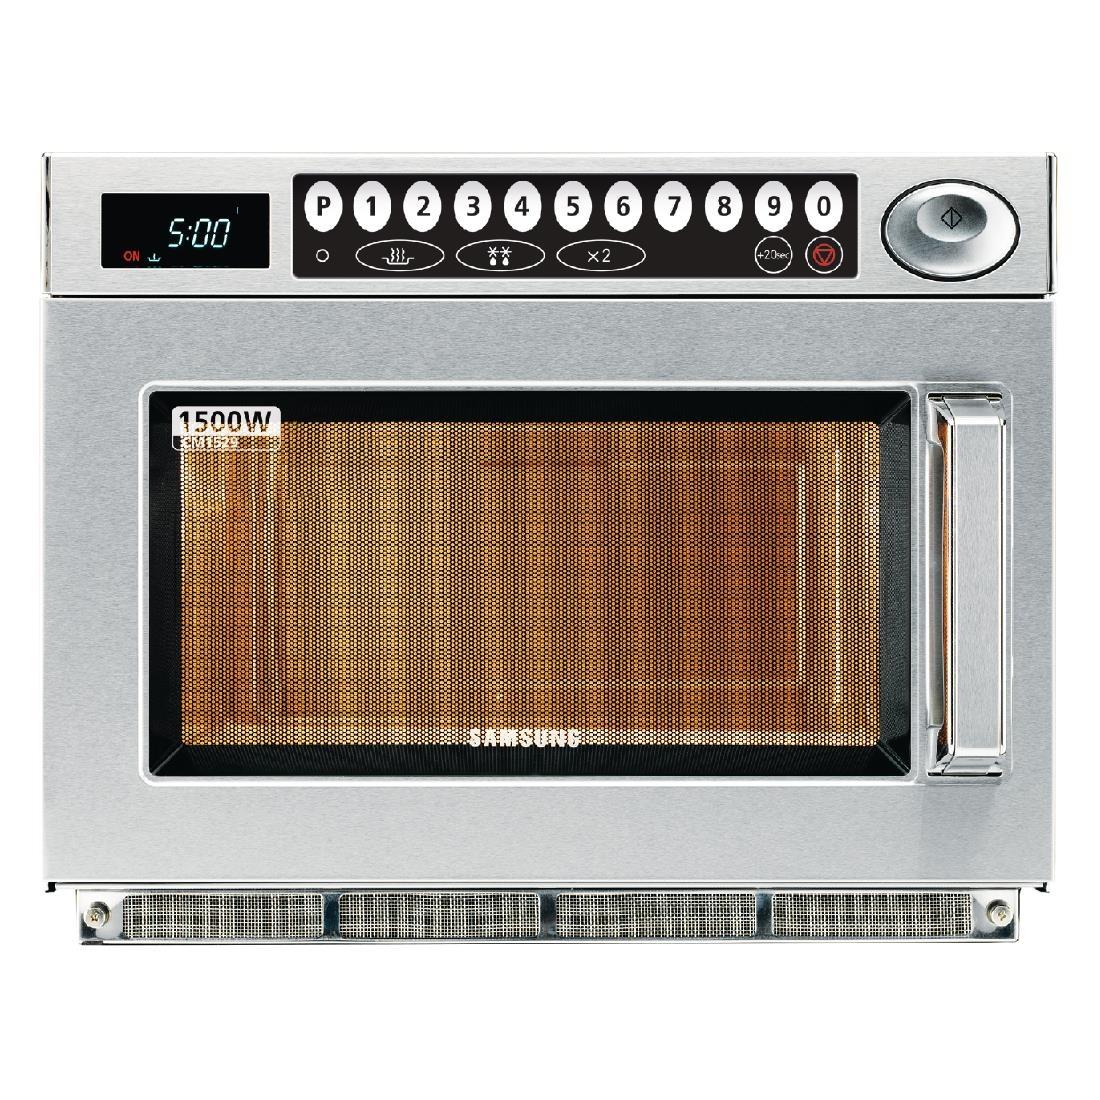 Samsung Programmable Microwave 26ltr 1500W CM1529XEU